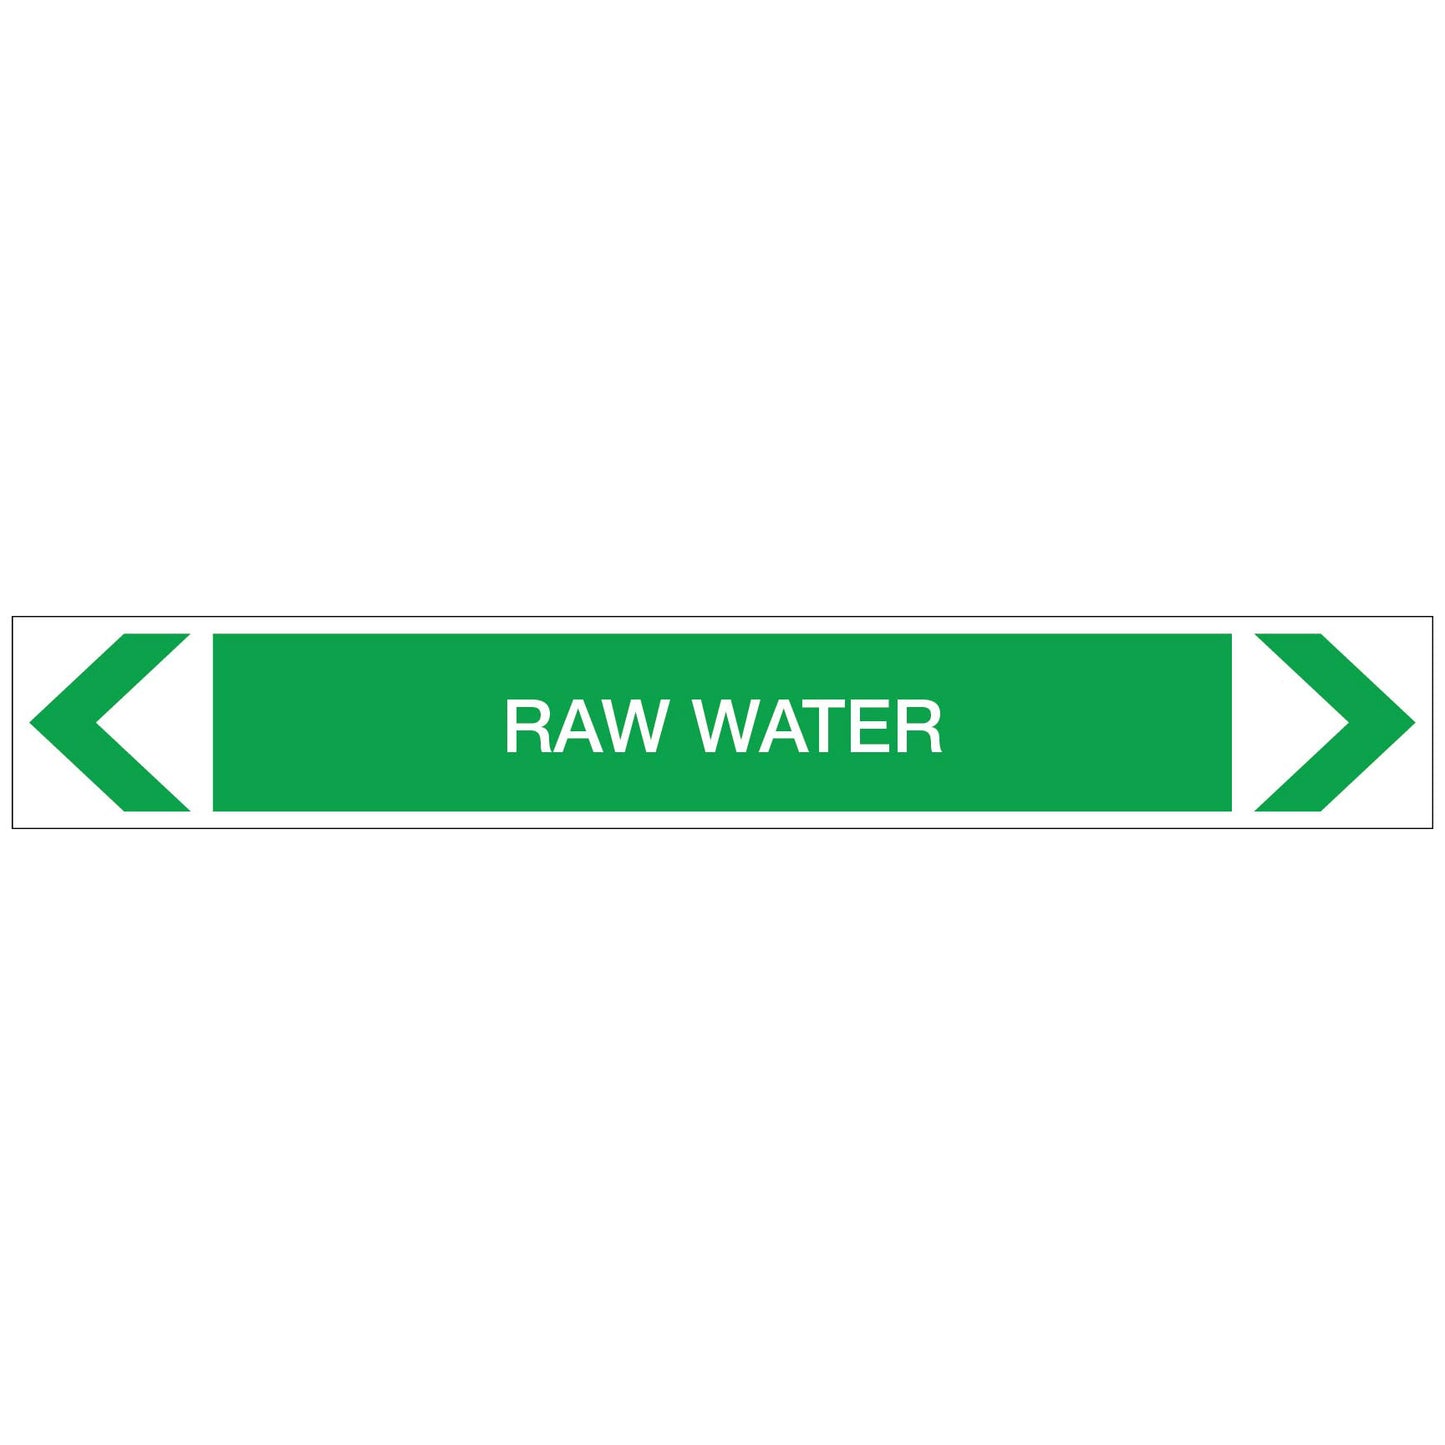 Water - Raw Water - Pipe Marker Sticker